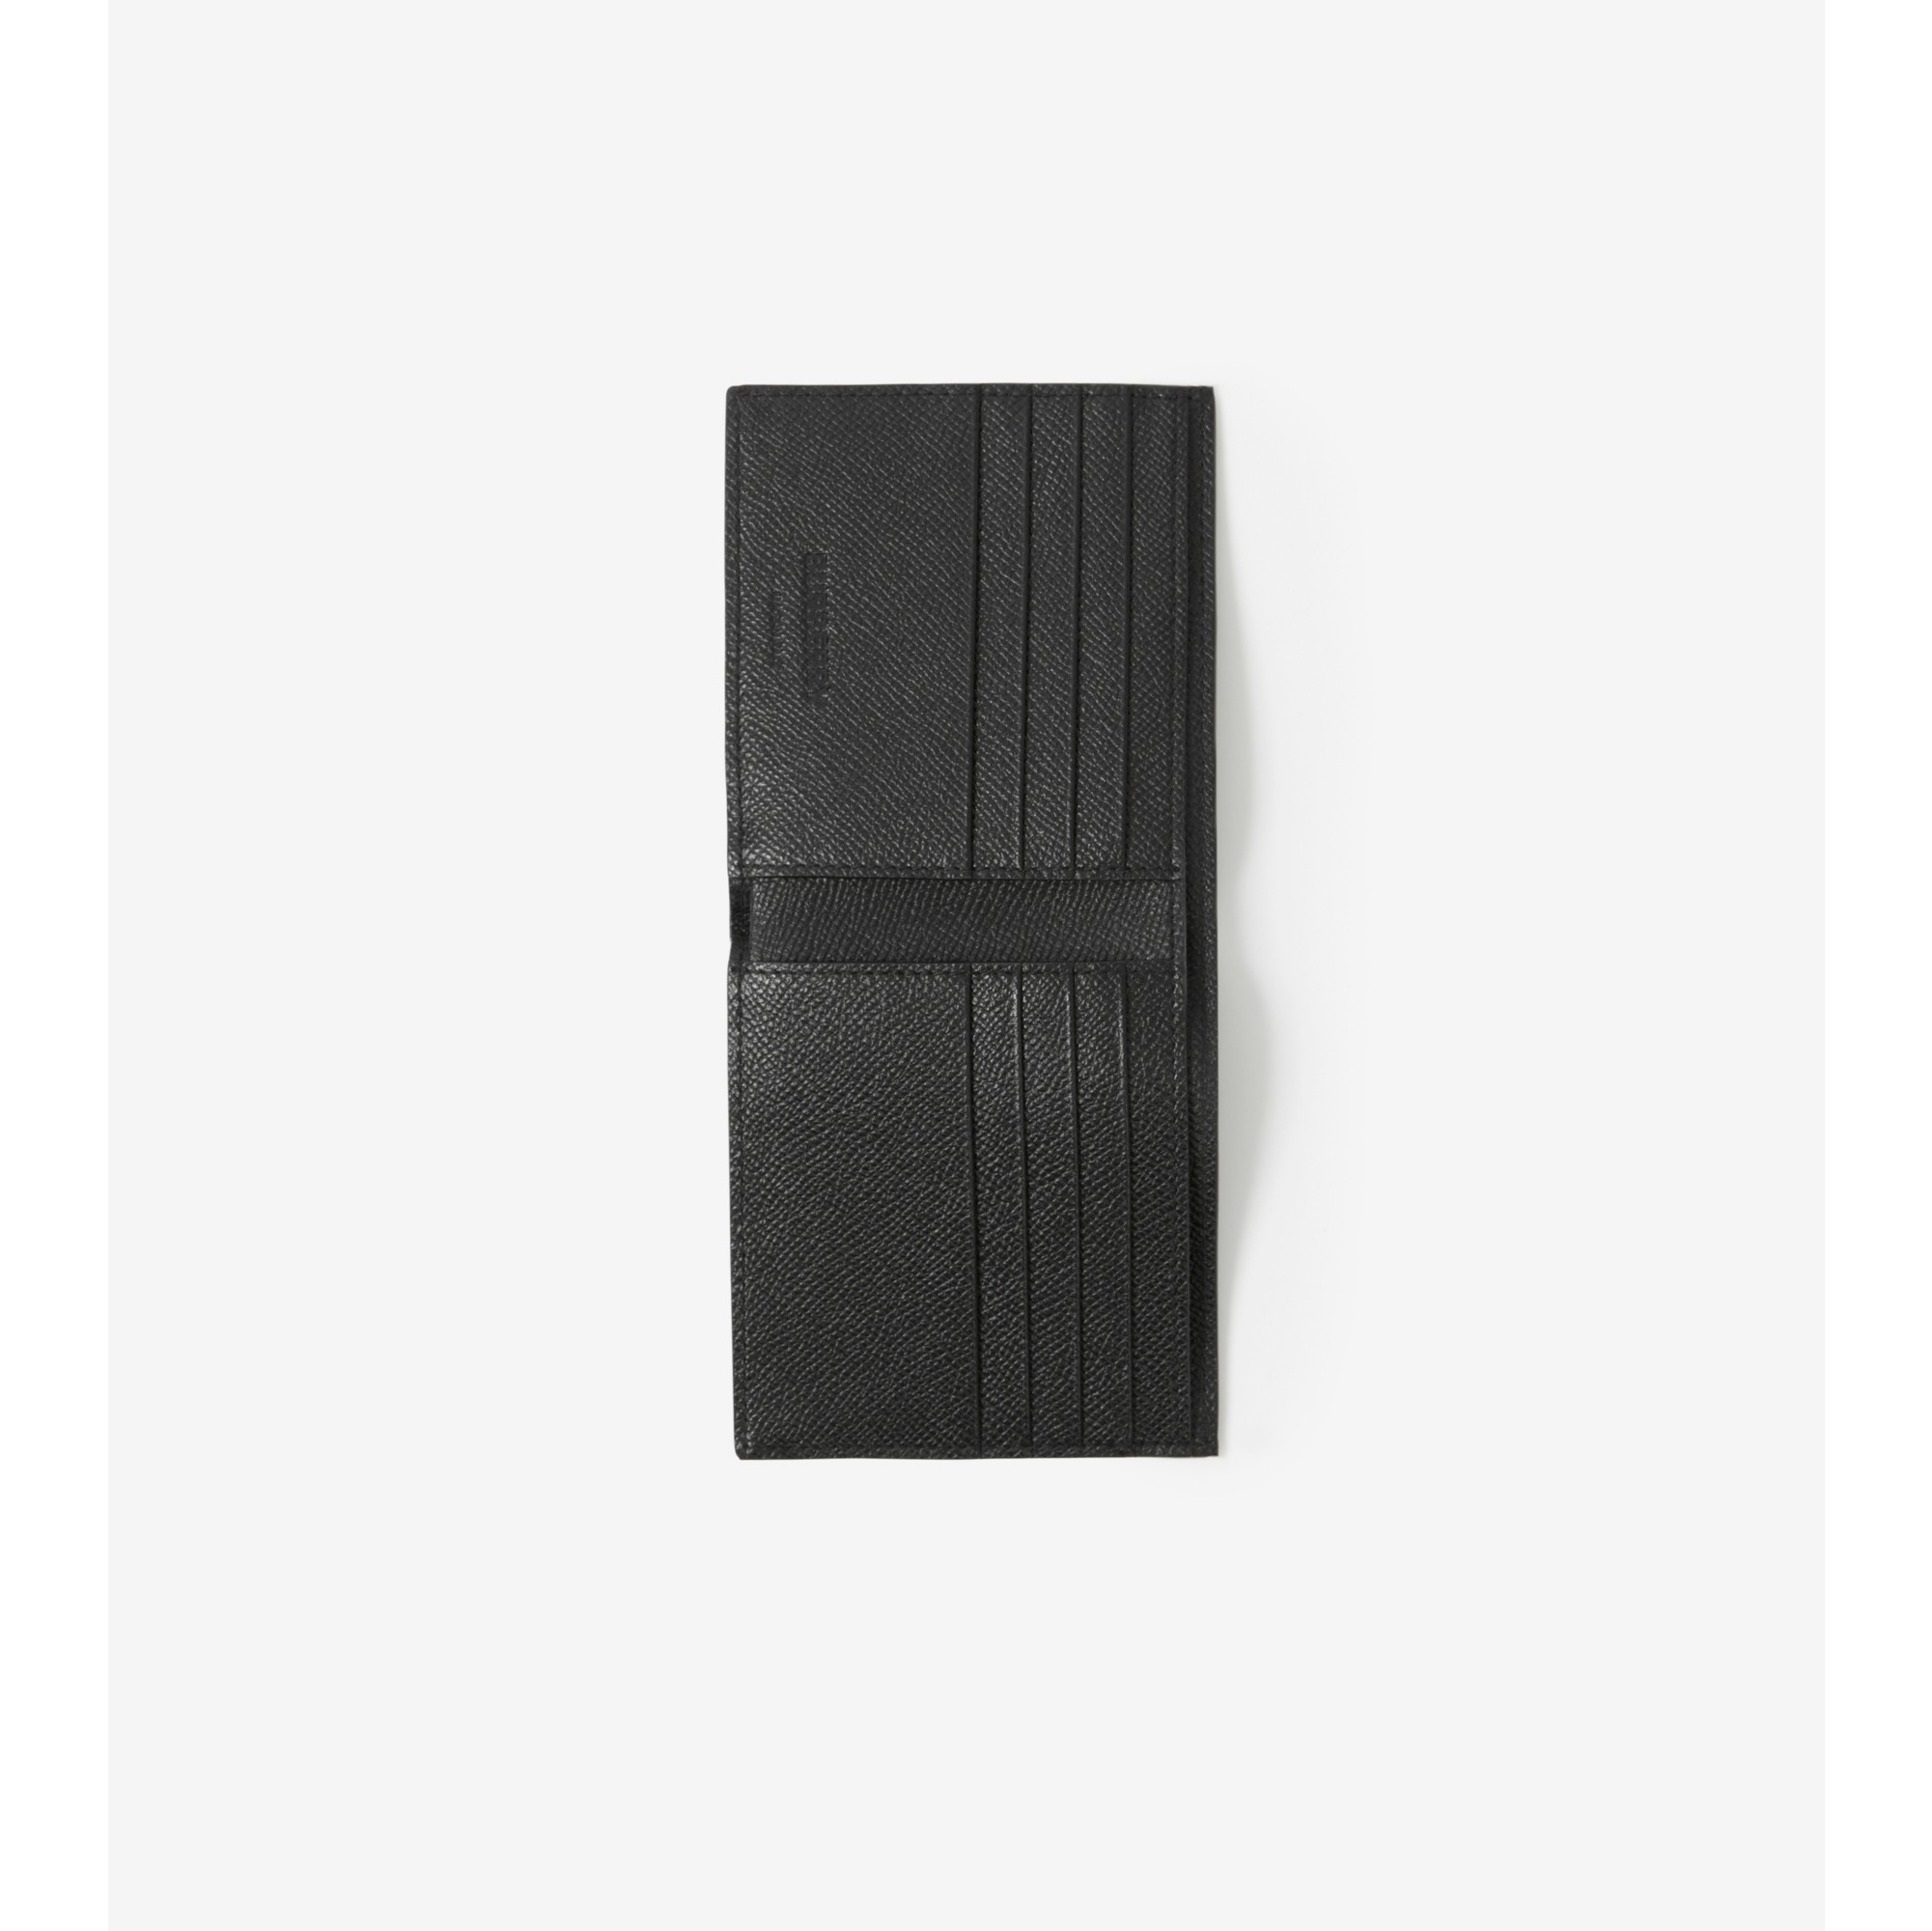 Burberry Tb Monogram Bi-fold Leather Wallet for Men